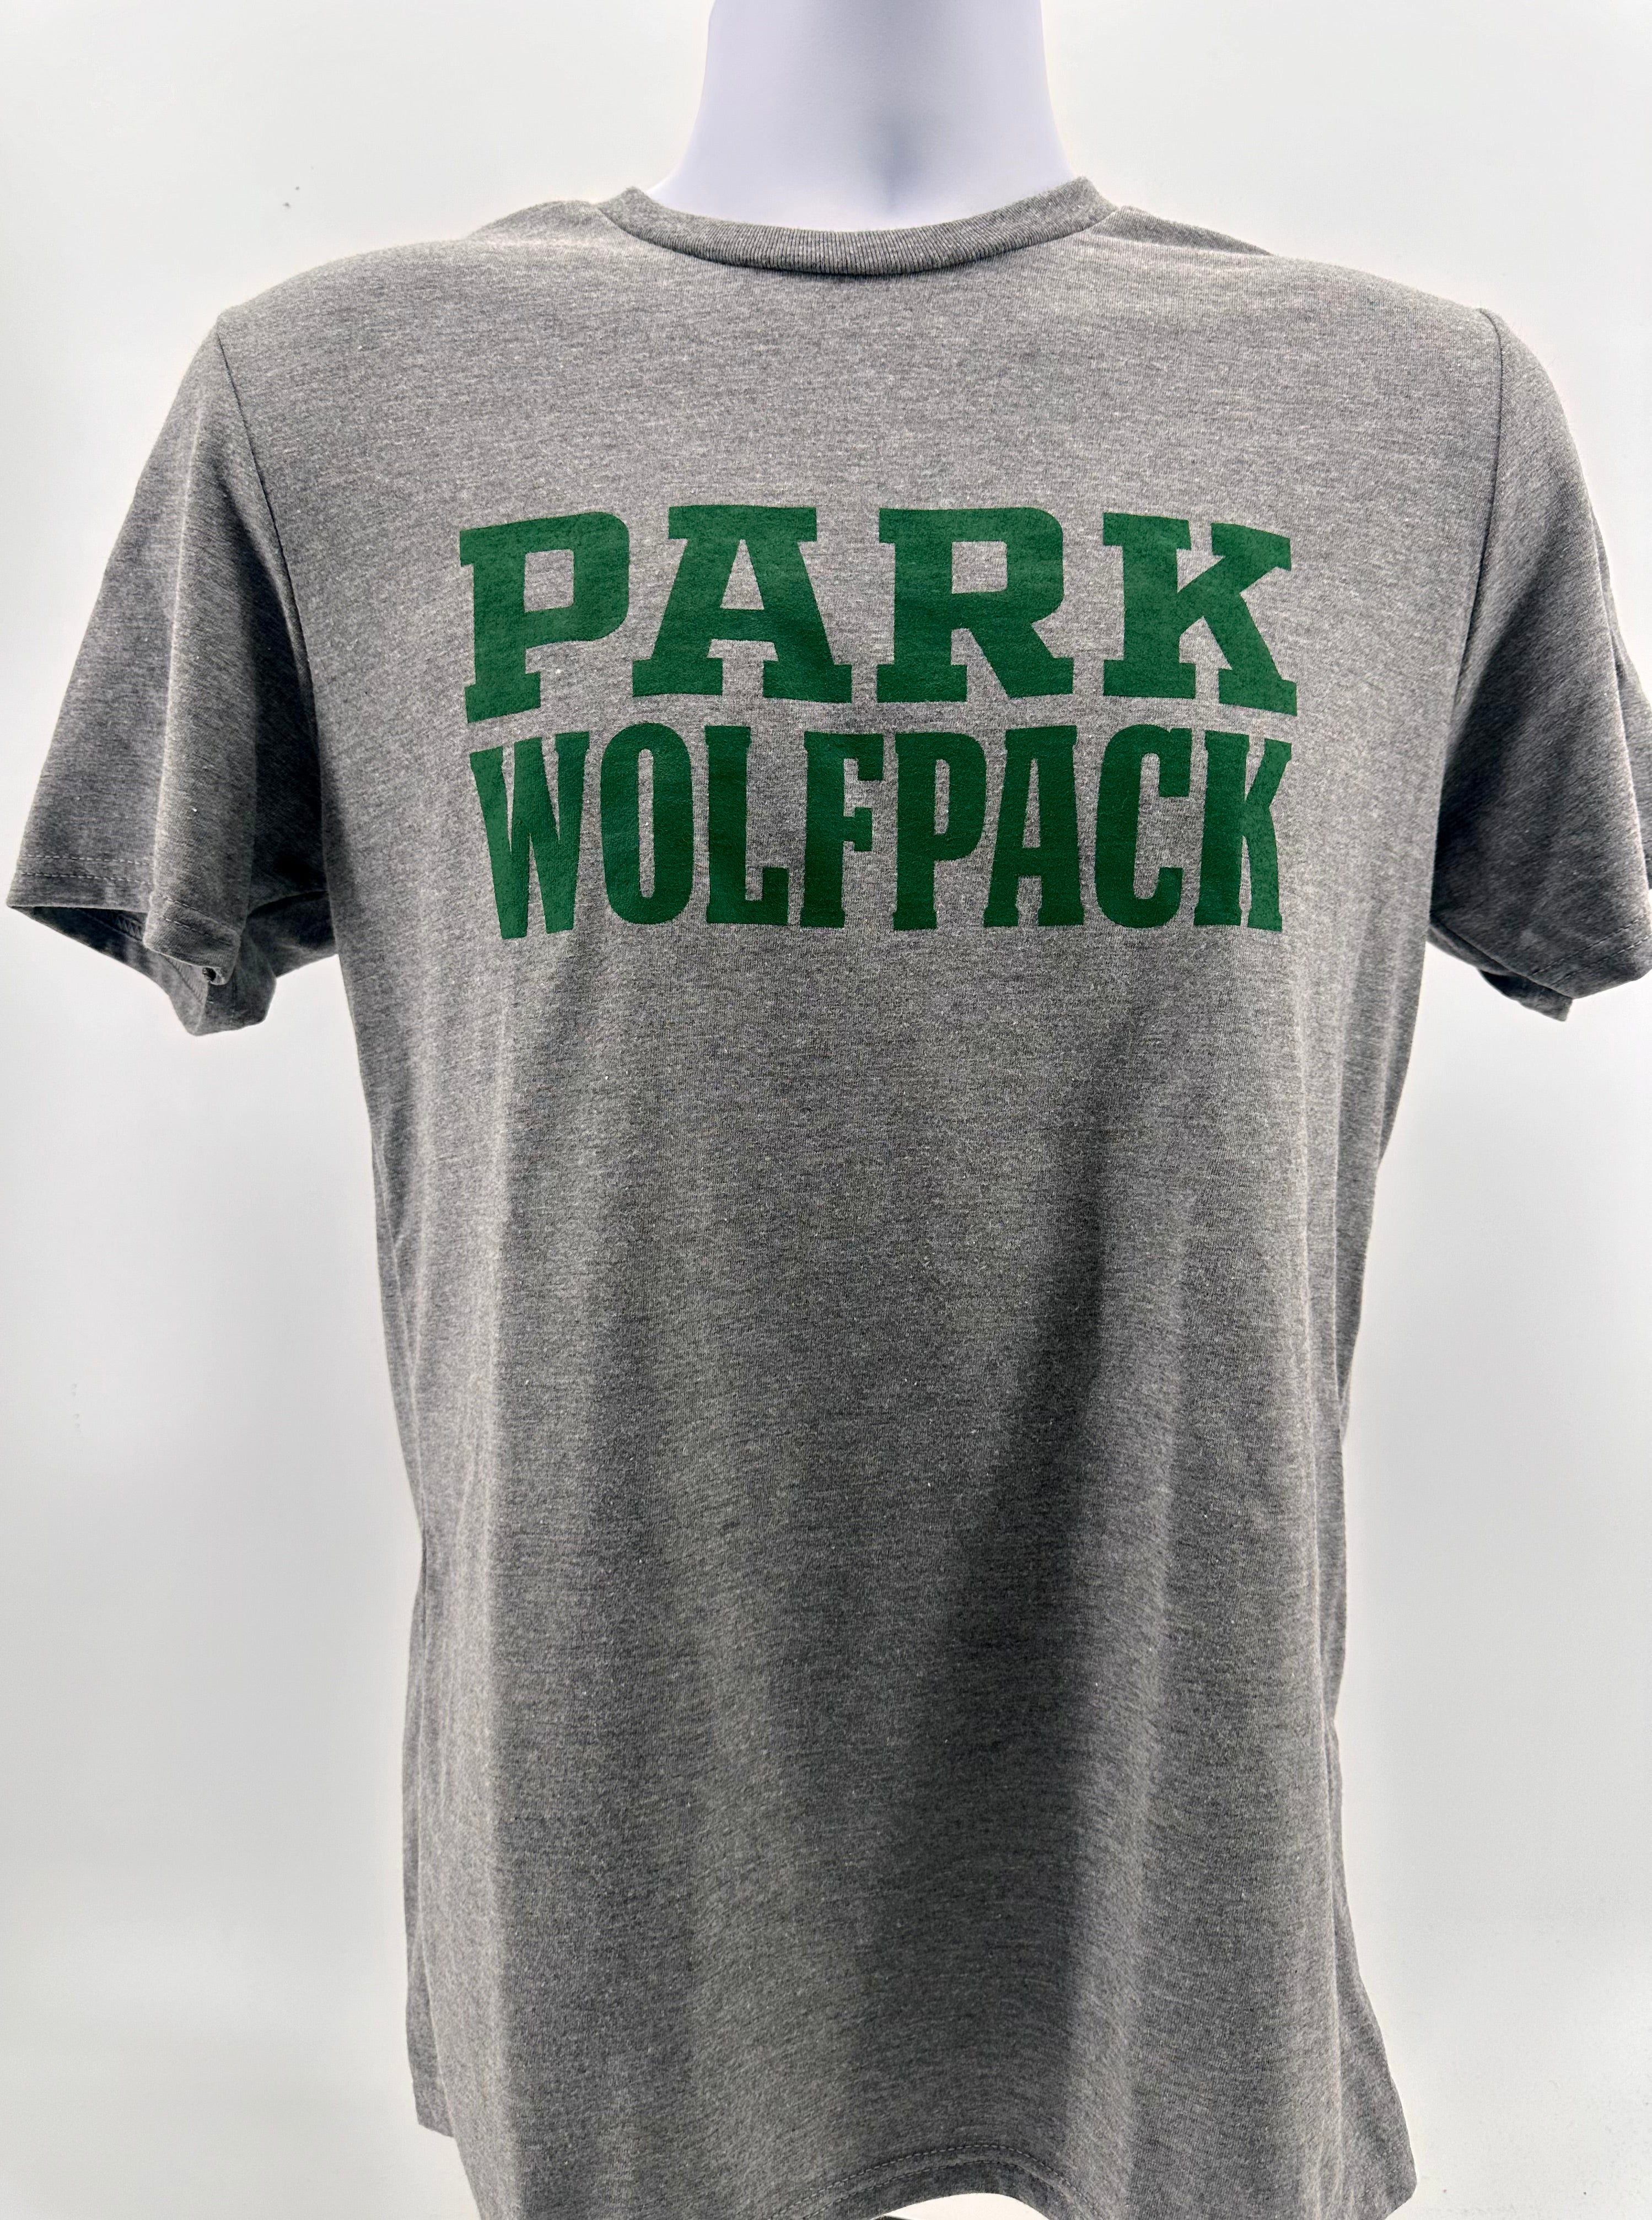 Wolfpack Allmade Tshirt-Tees-Advanced Sportswear